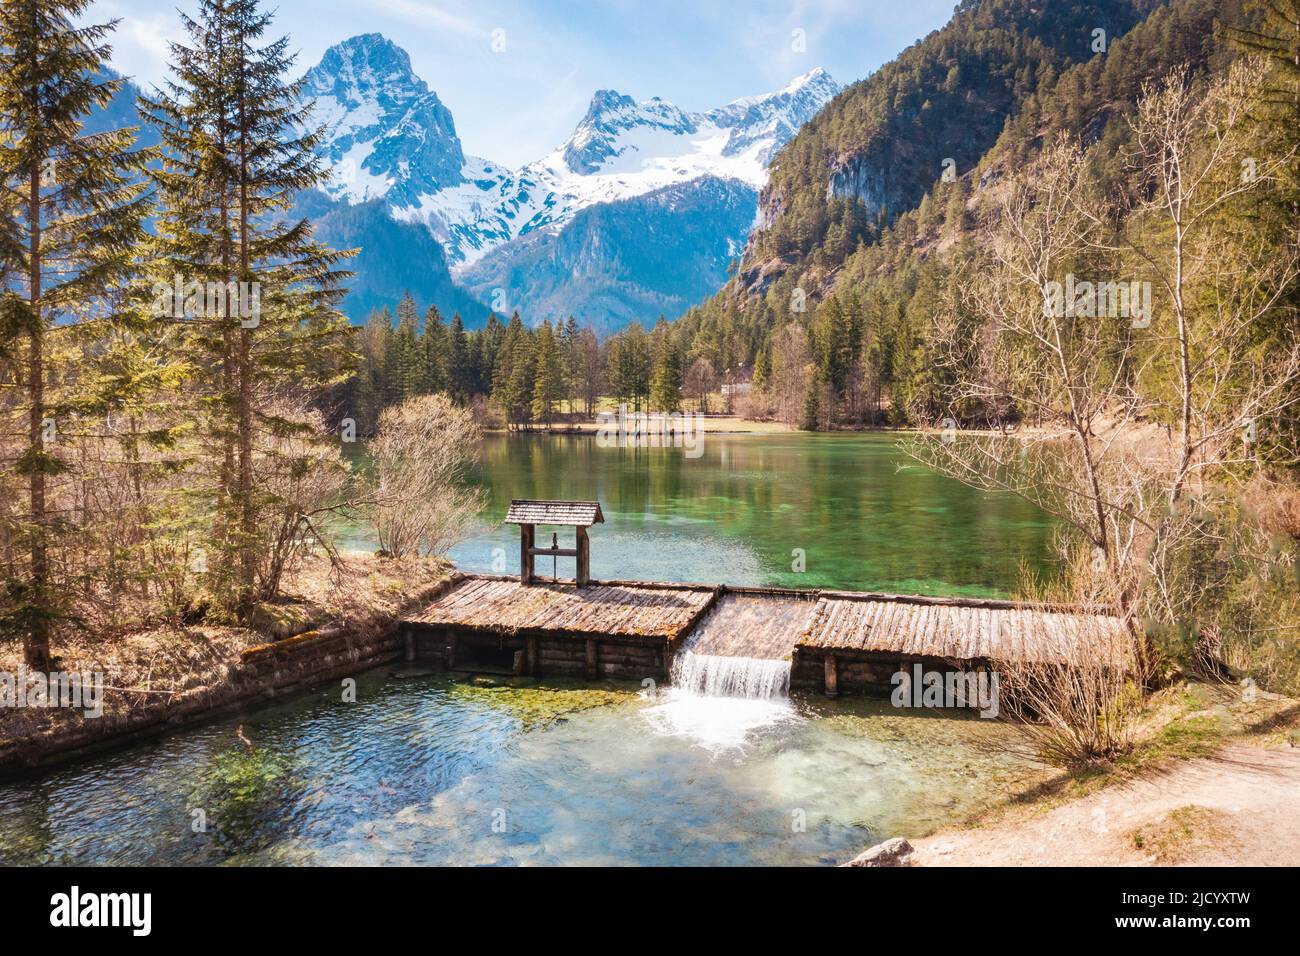 Schiederweiher lake close to Hinterstoder in Austria. Beautiful scenic landscape in the Austrian Alps. Stock Photo